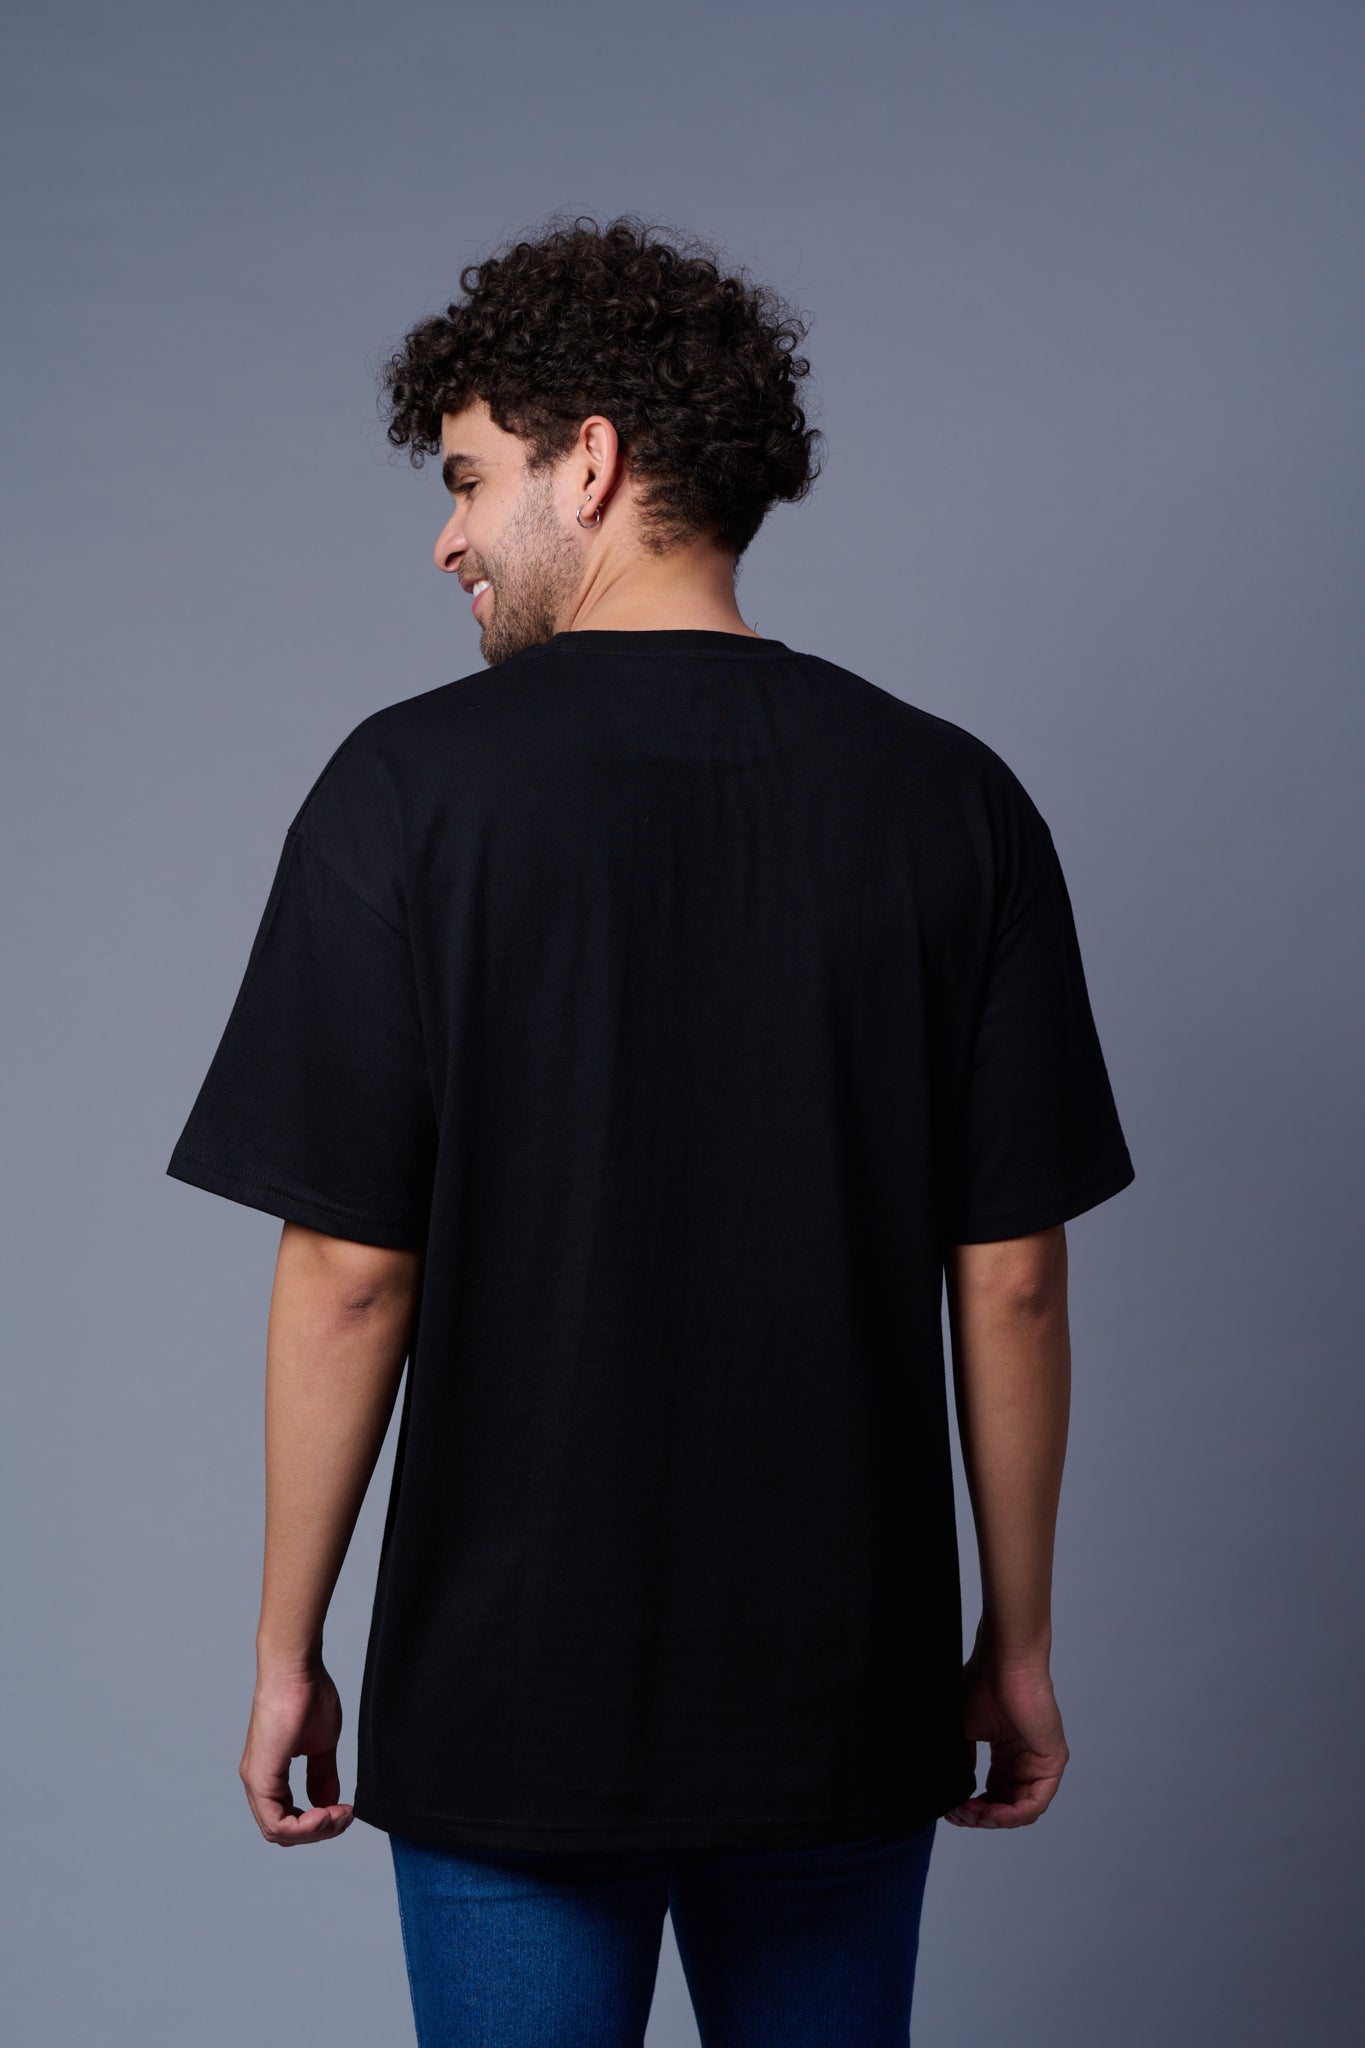 Baid Boiyn Printed Black Oversized T-Shirt for Men